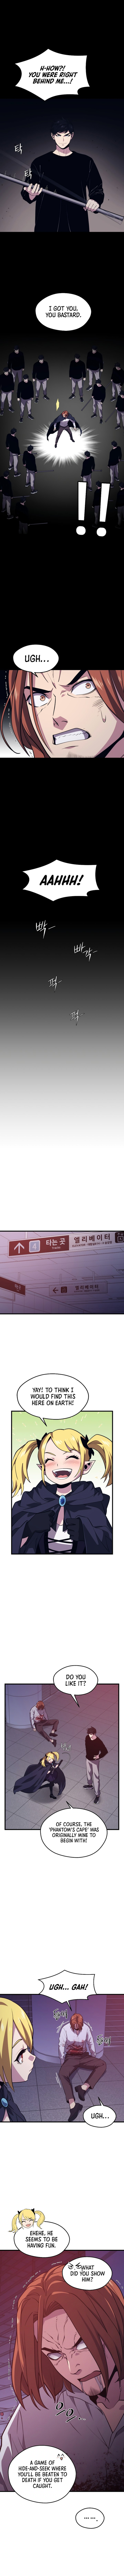 seoul_stations_necromancer_66_3